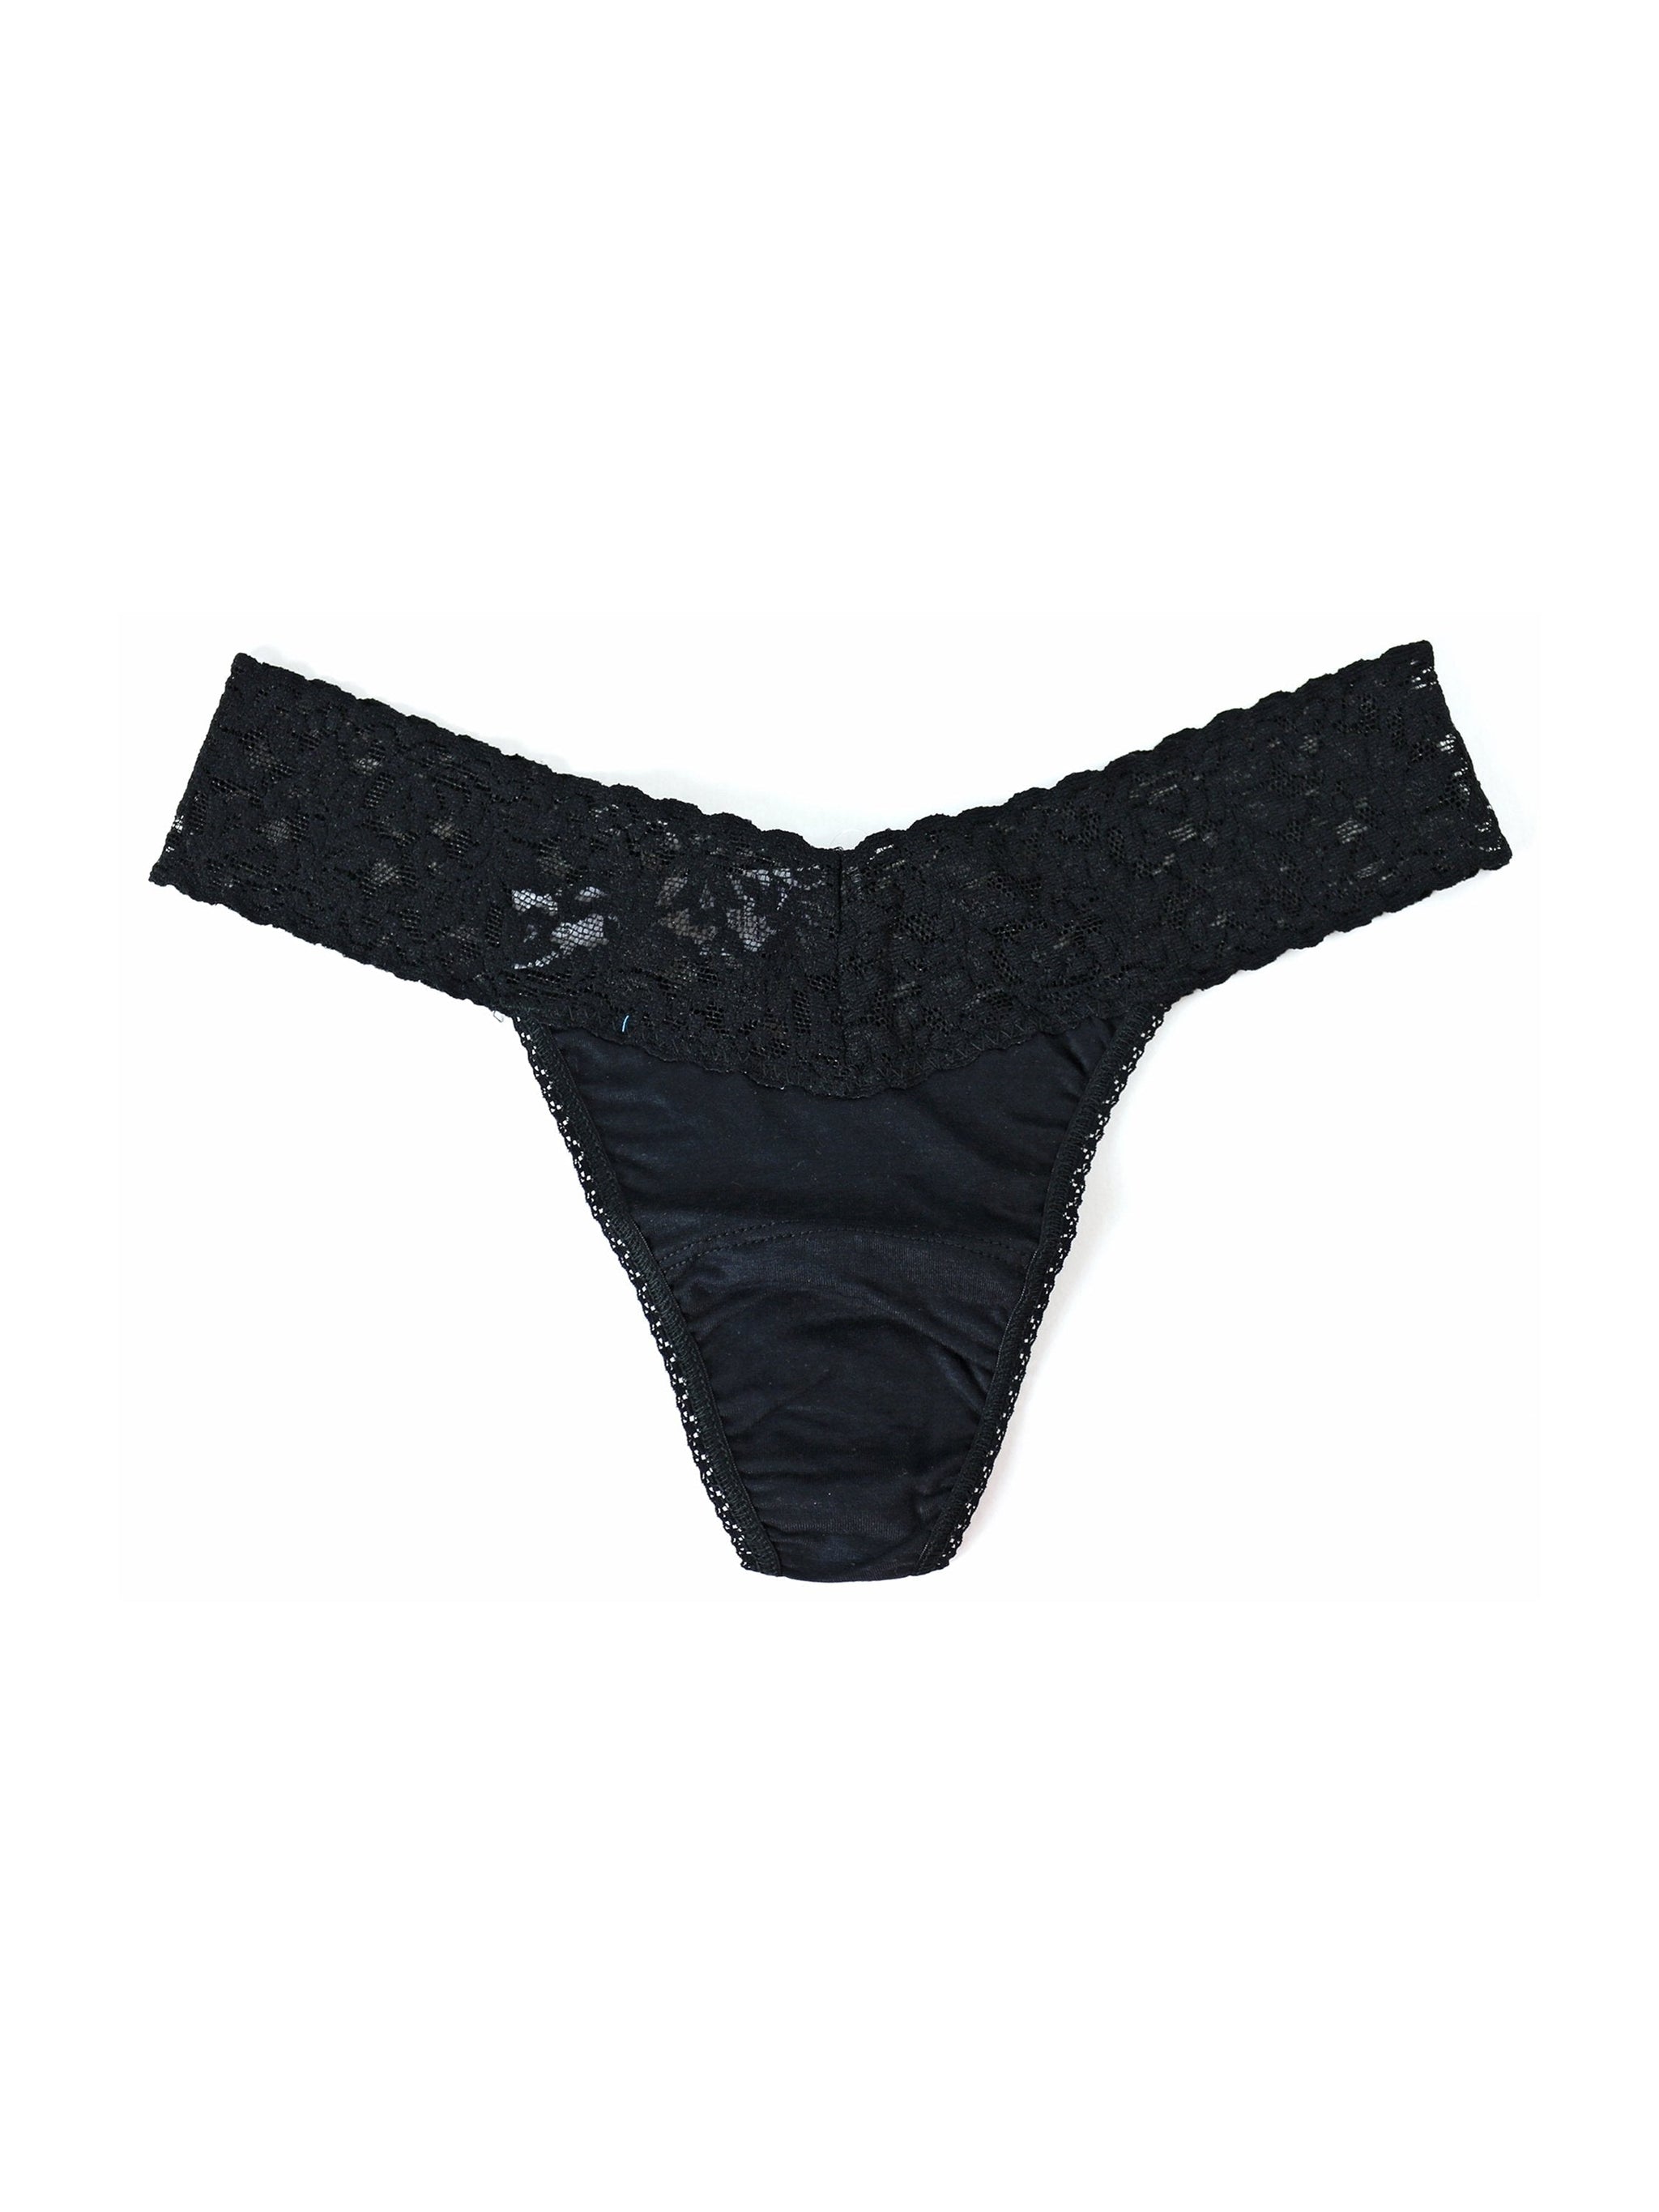 Buy MySexyShorts Naughty Flirty Women's Underwear, Seamless Cotton